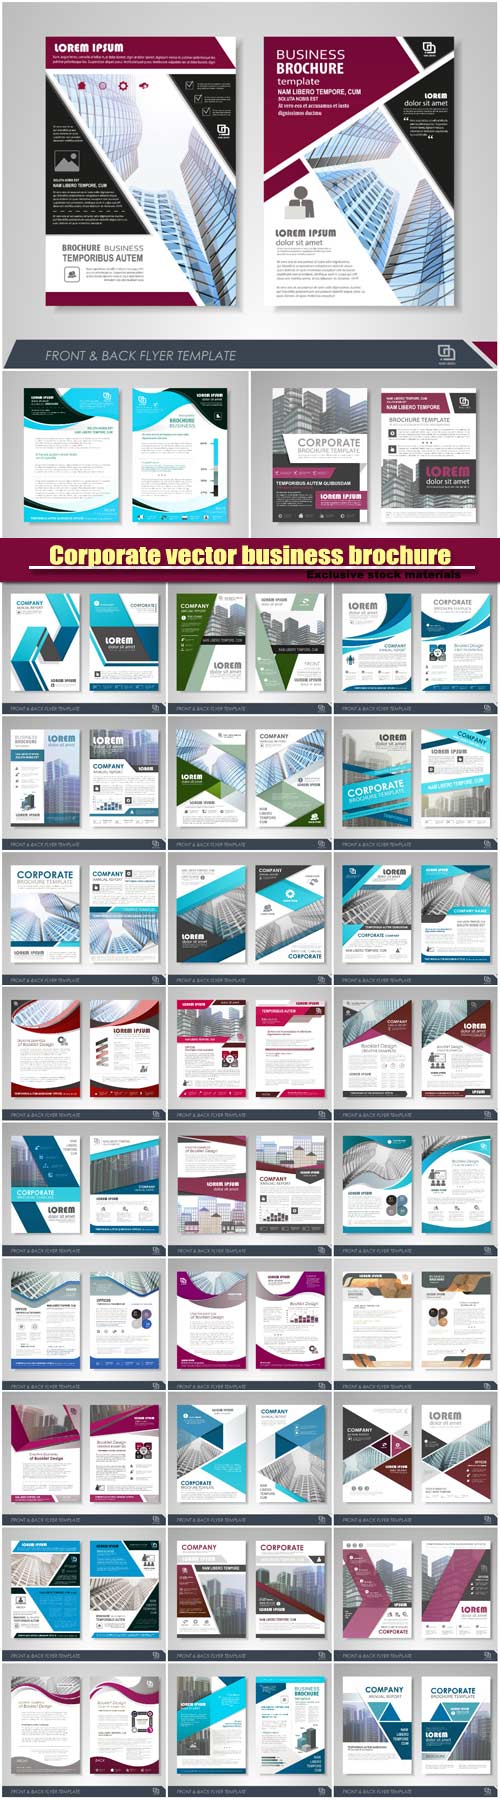 Corporate vector business brochure, flyer design layout